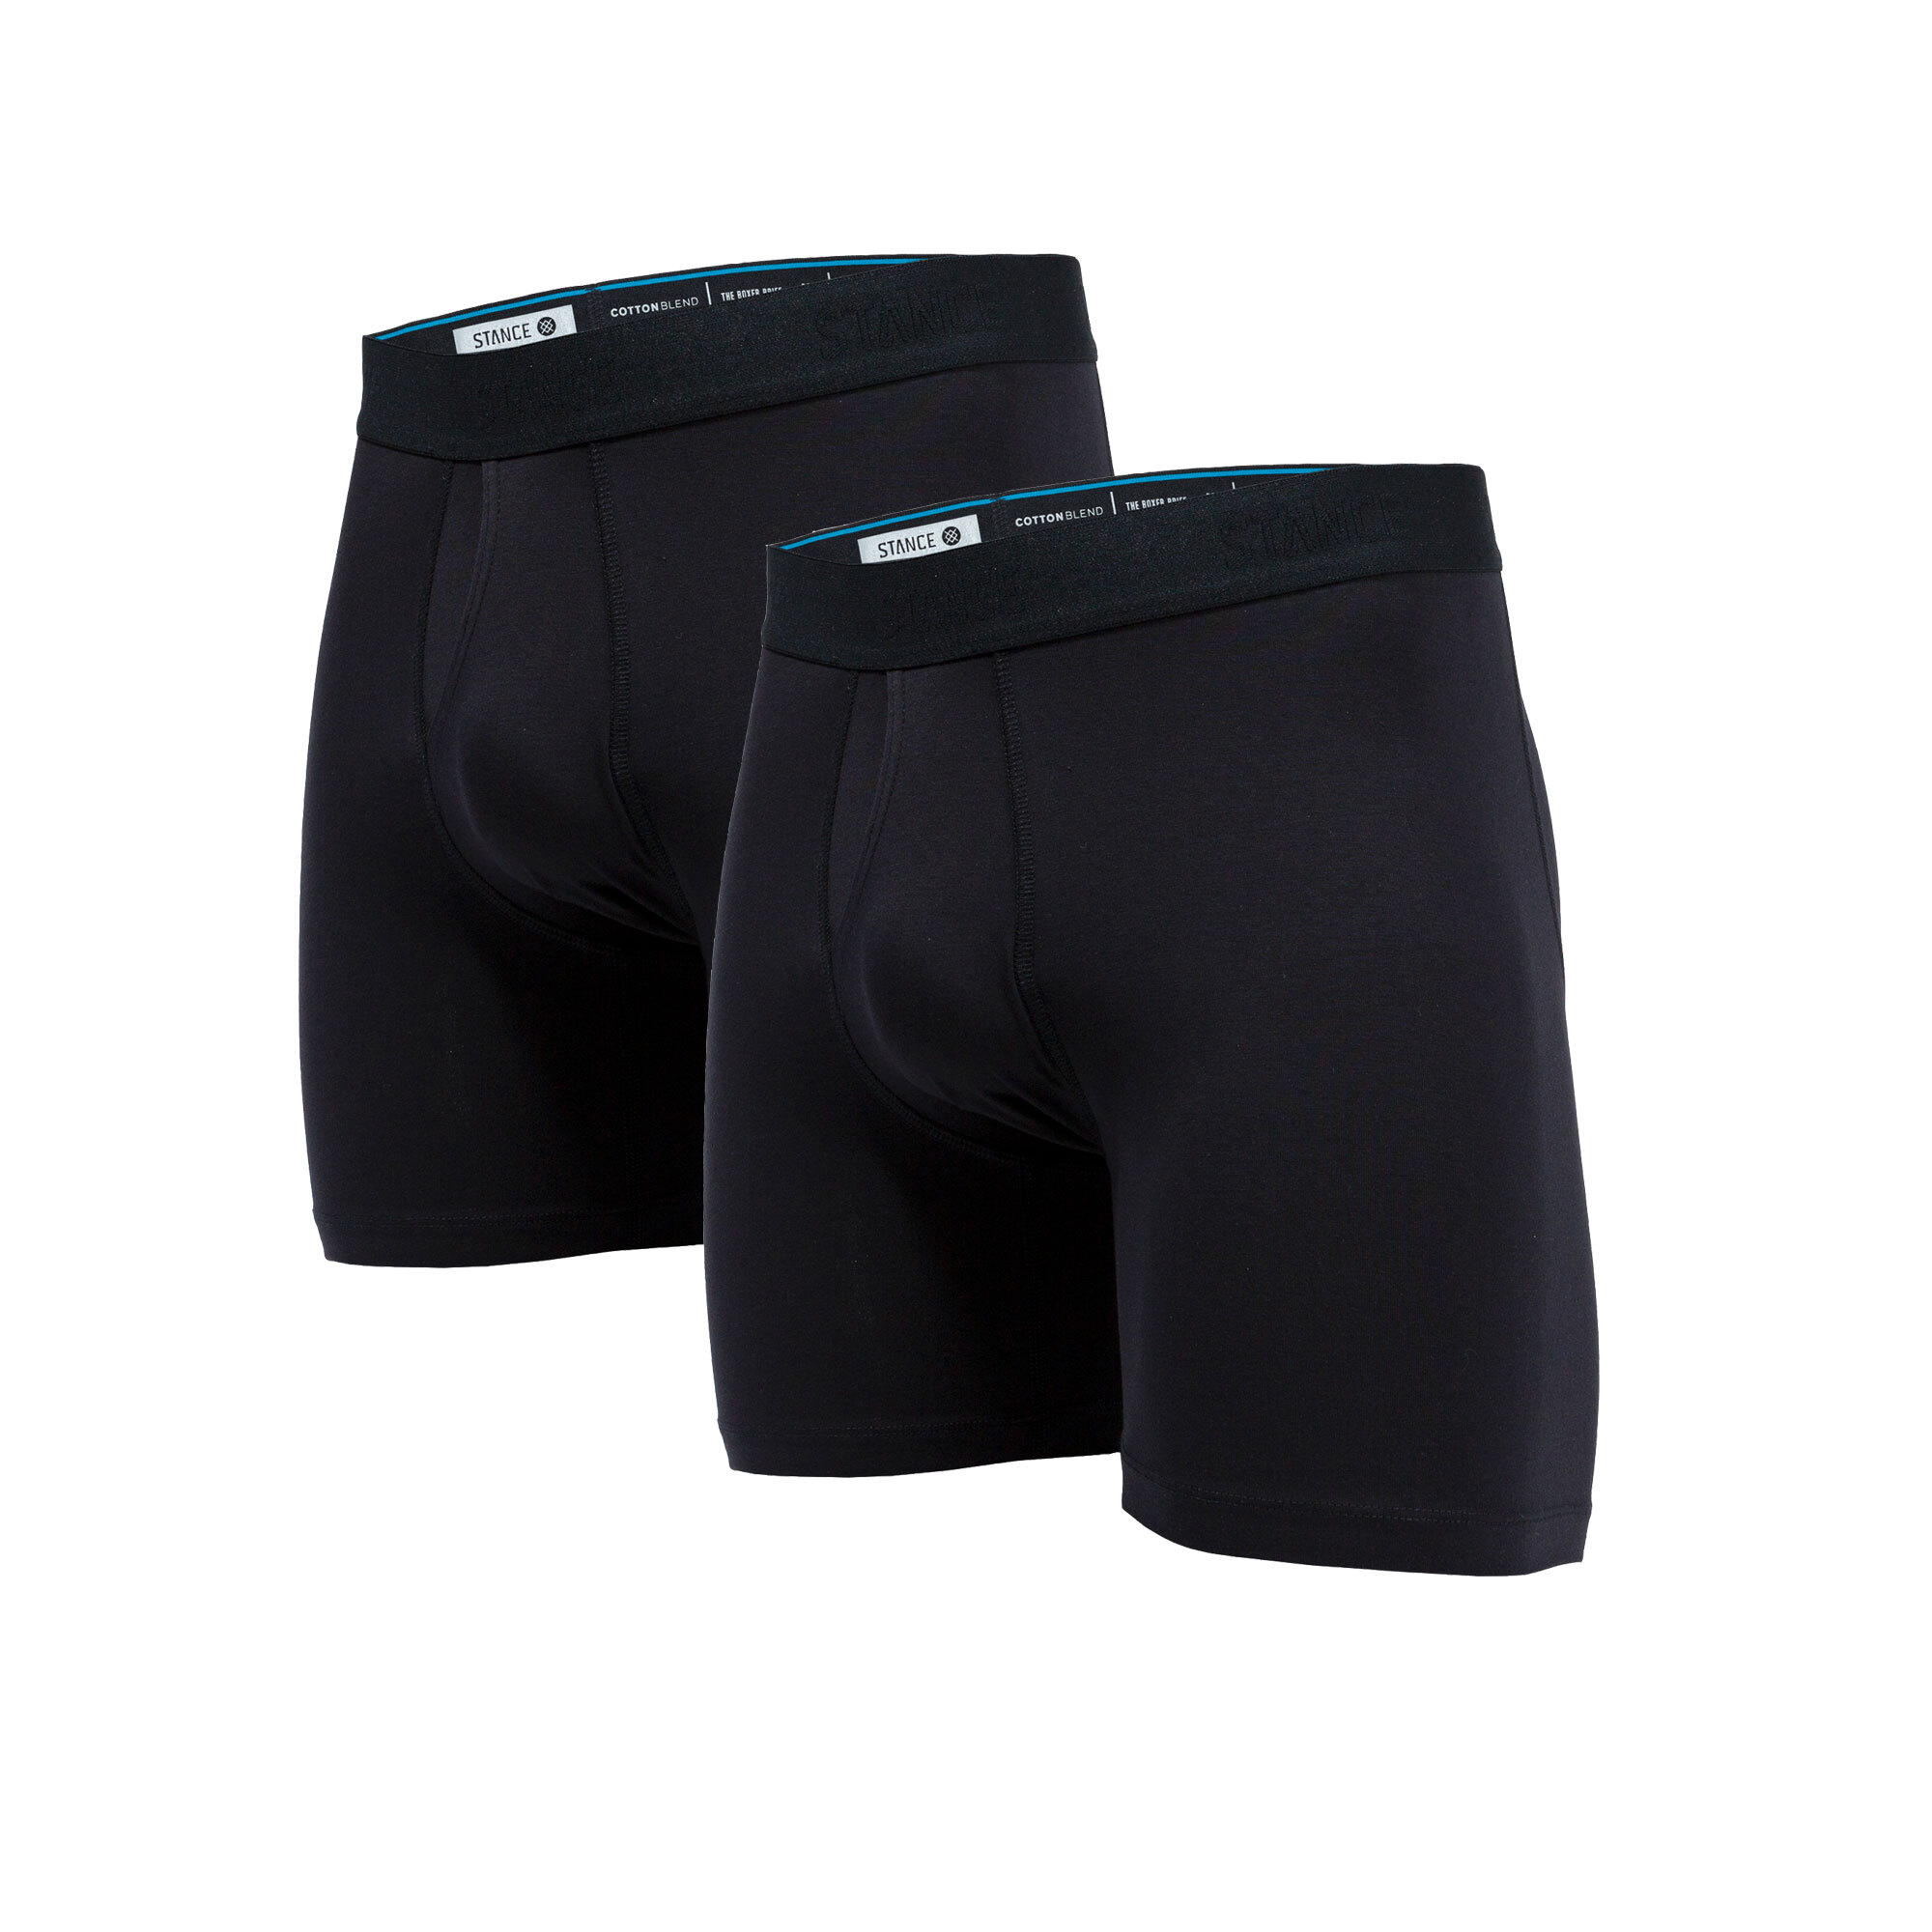 STANCE 2-Pack Butter Blend Boxer Brief Underwear sz L Large (35-38) Black  Gray